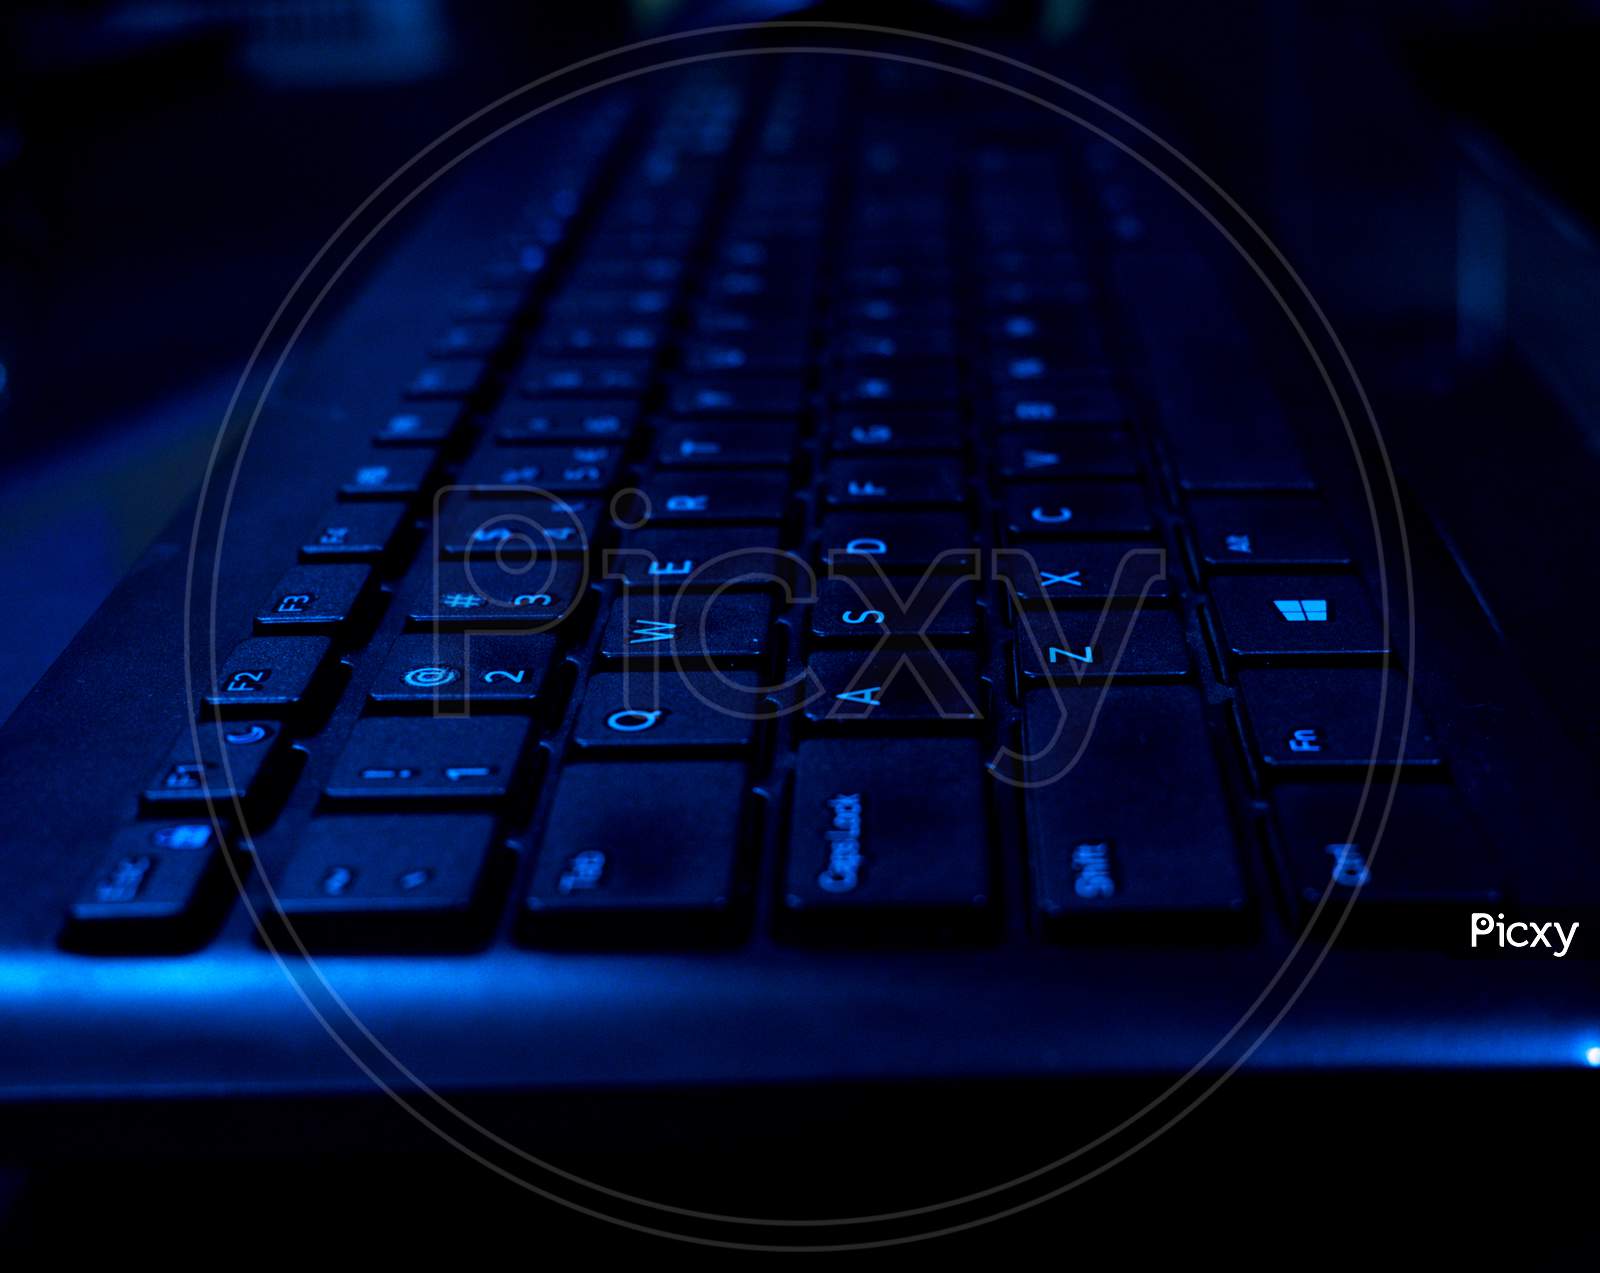 Black keyboard with uv blue light effect